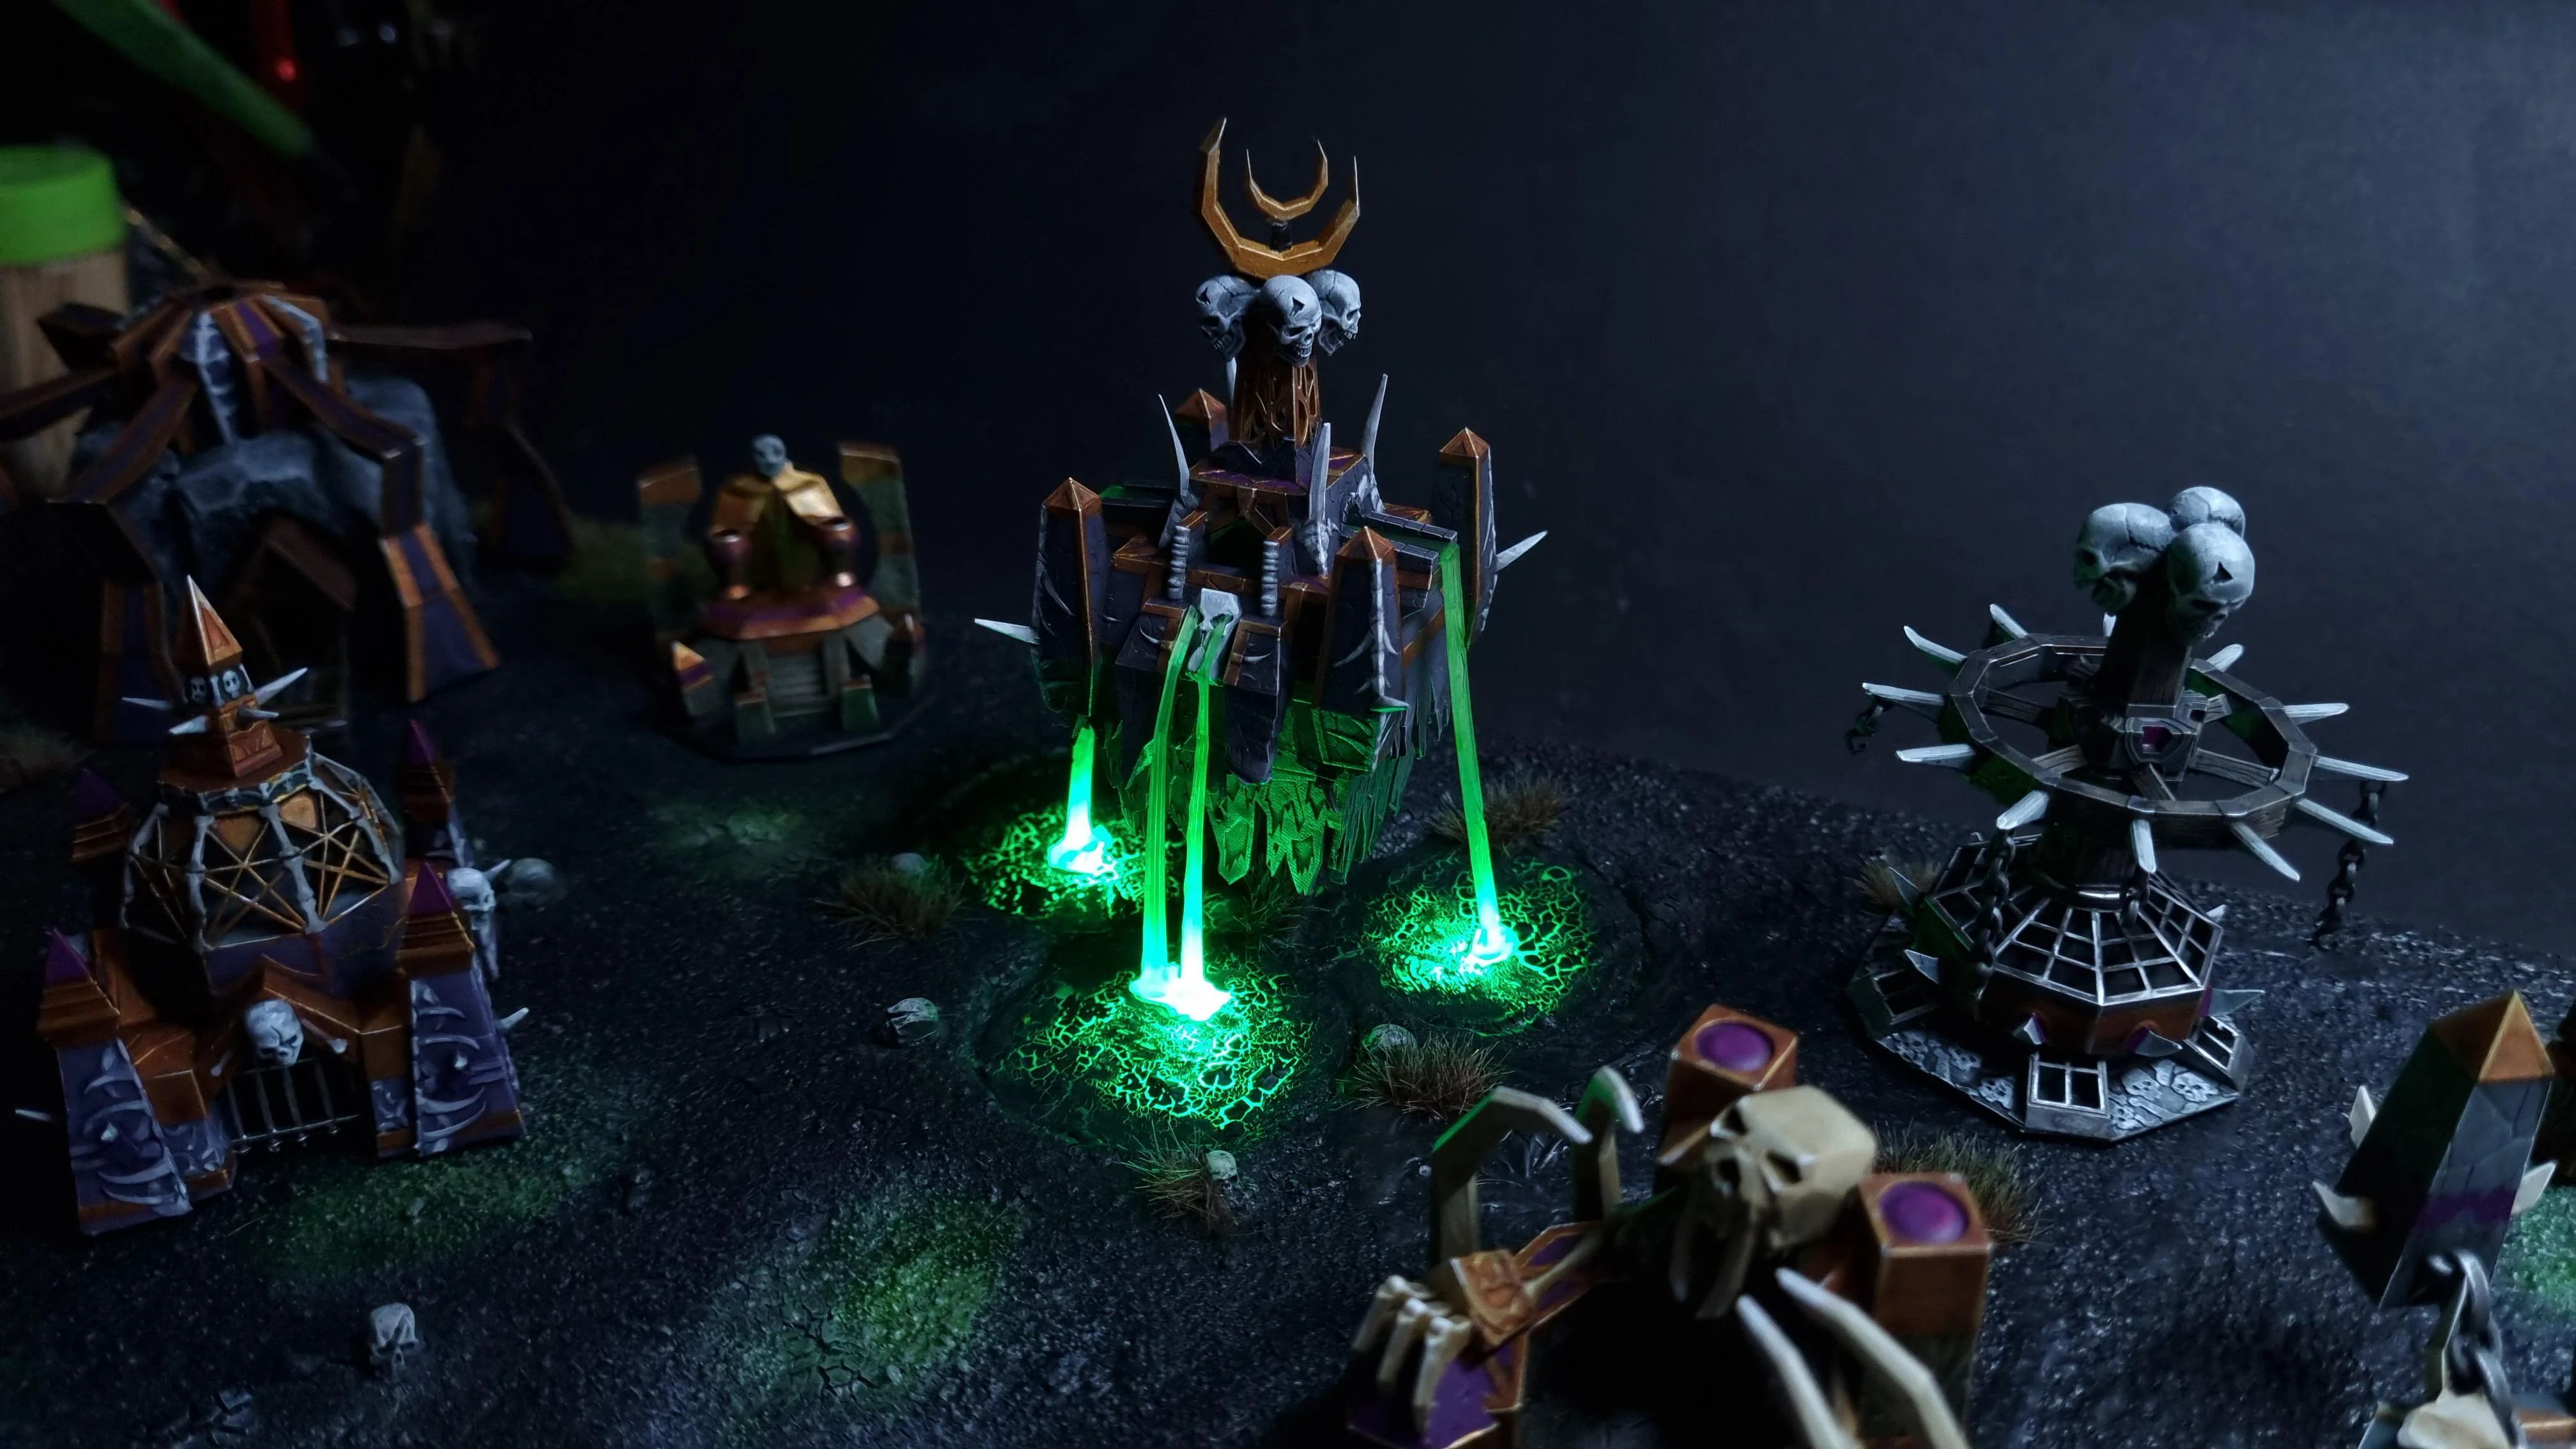 Диорама базы нежити из Warcraft III. Автор: MiniQuest64
